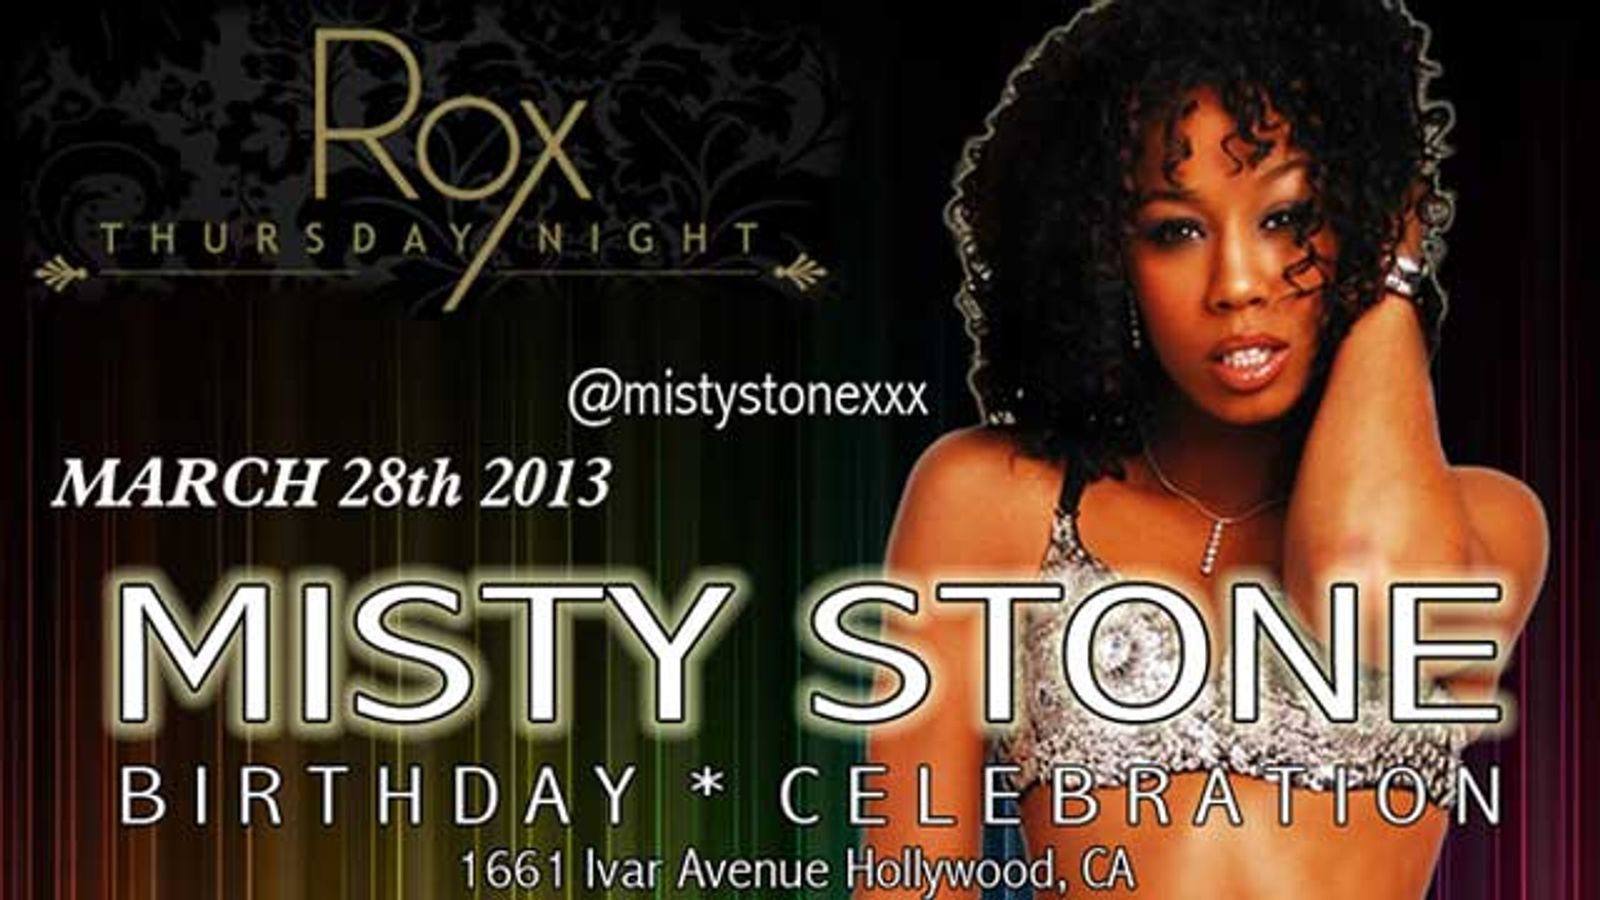 Misty Stone Birthday Party This Thursday at Roxbury